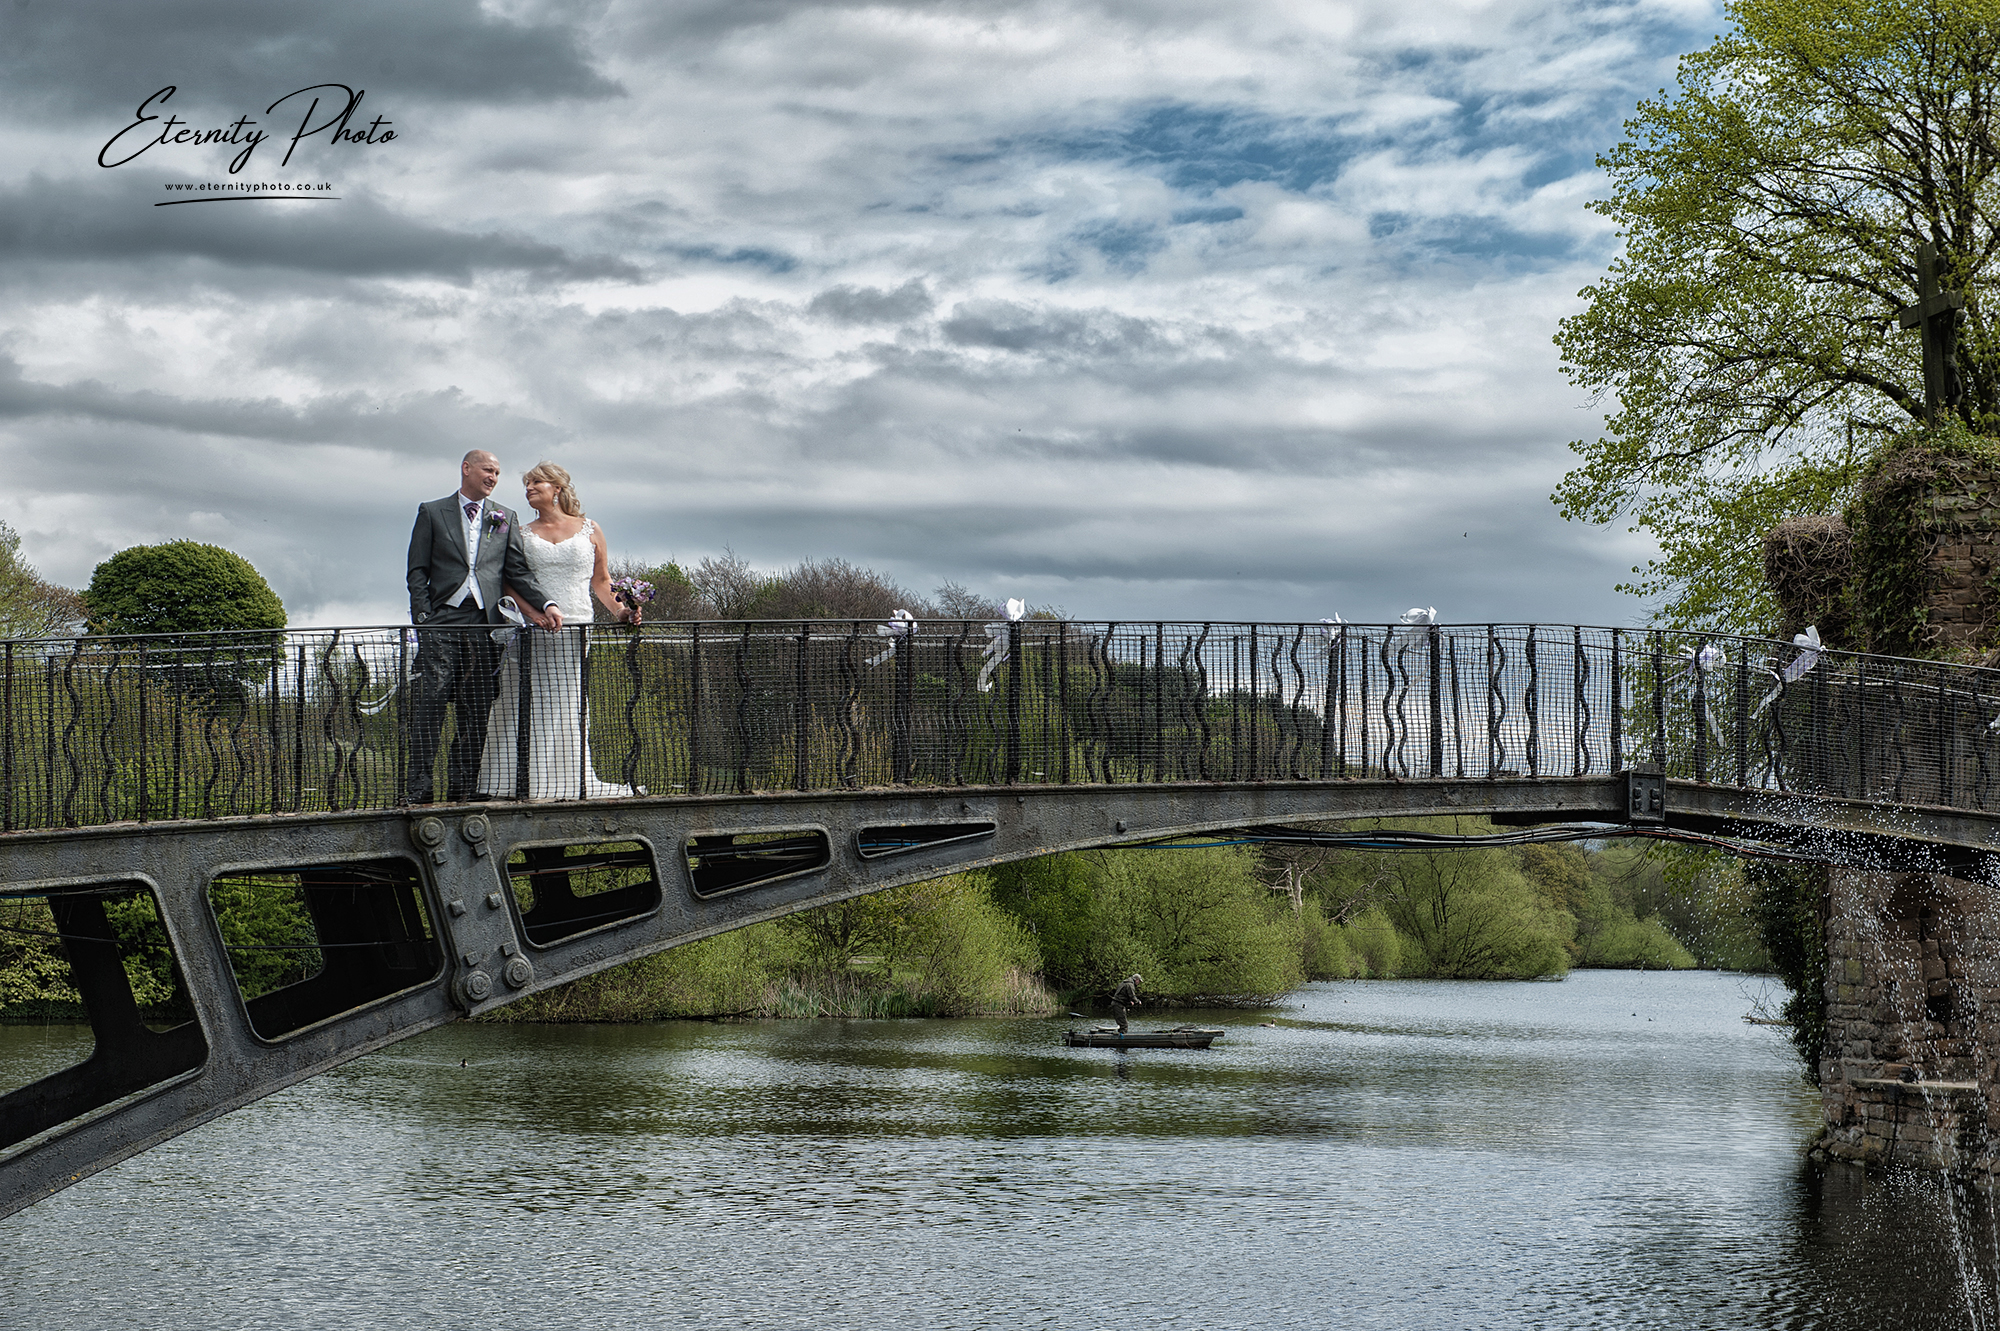 Bridal couple posing on picturesque metal bridge over river.